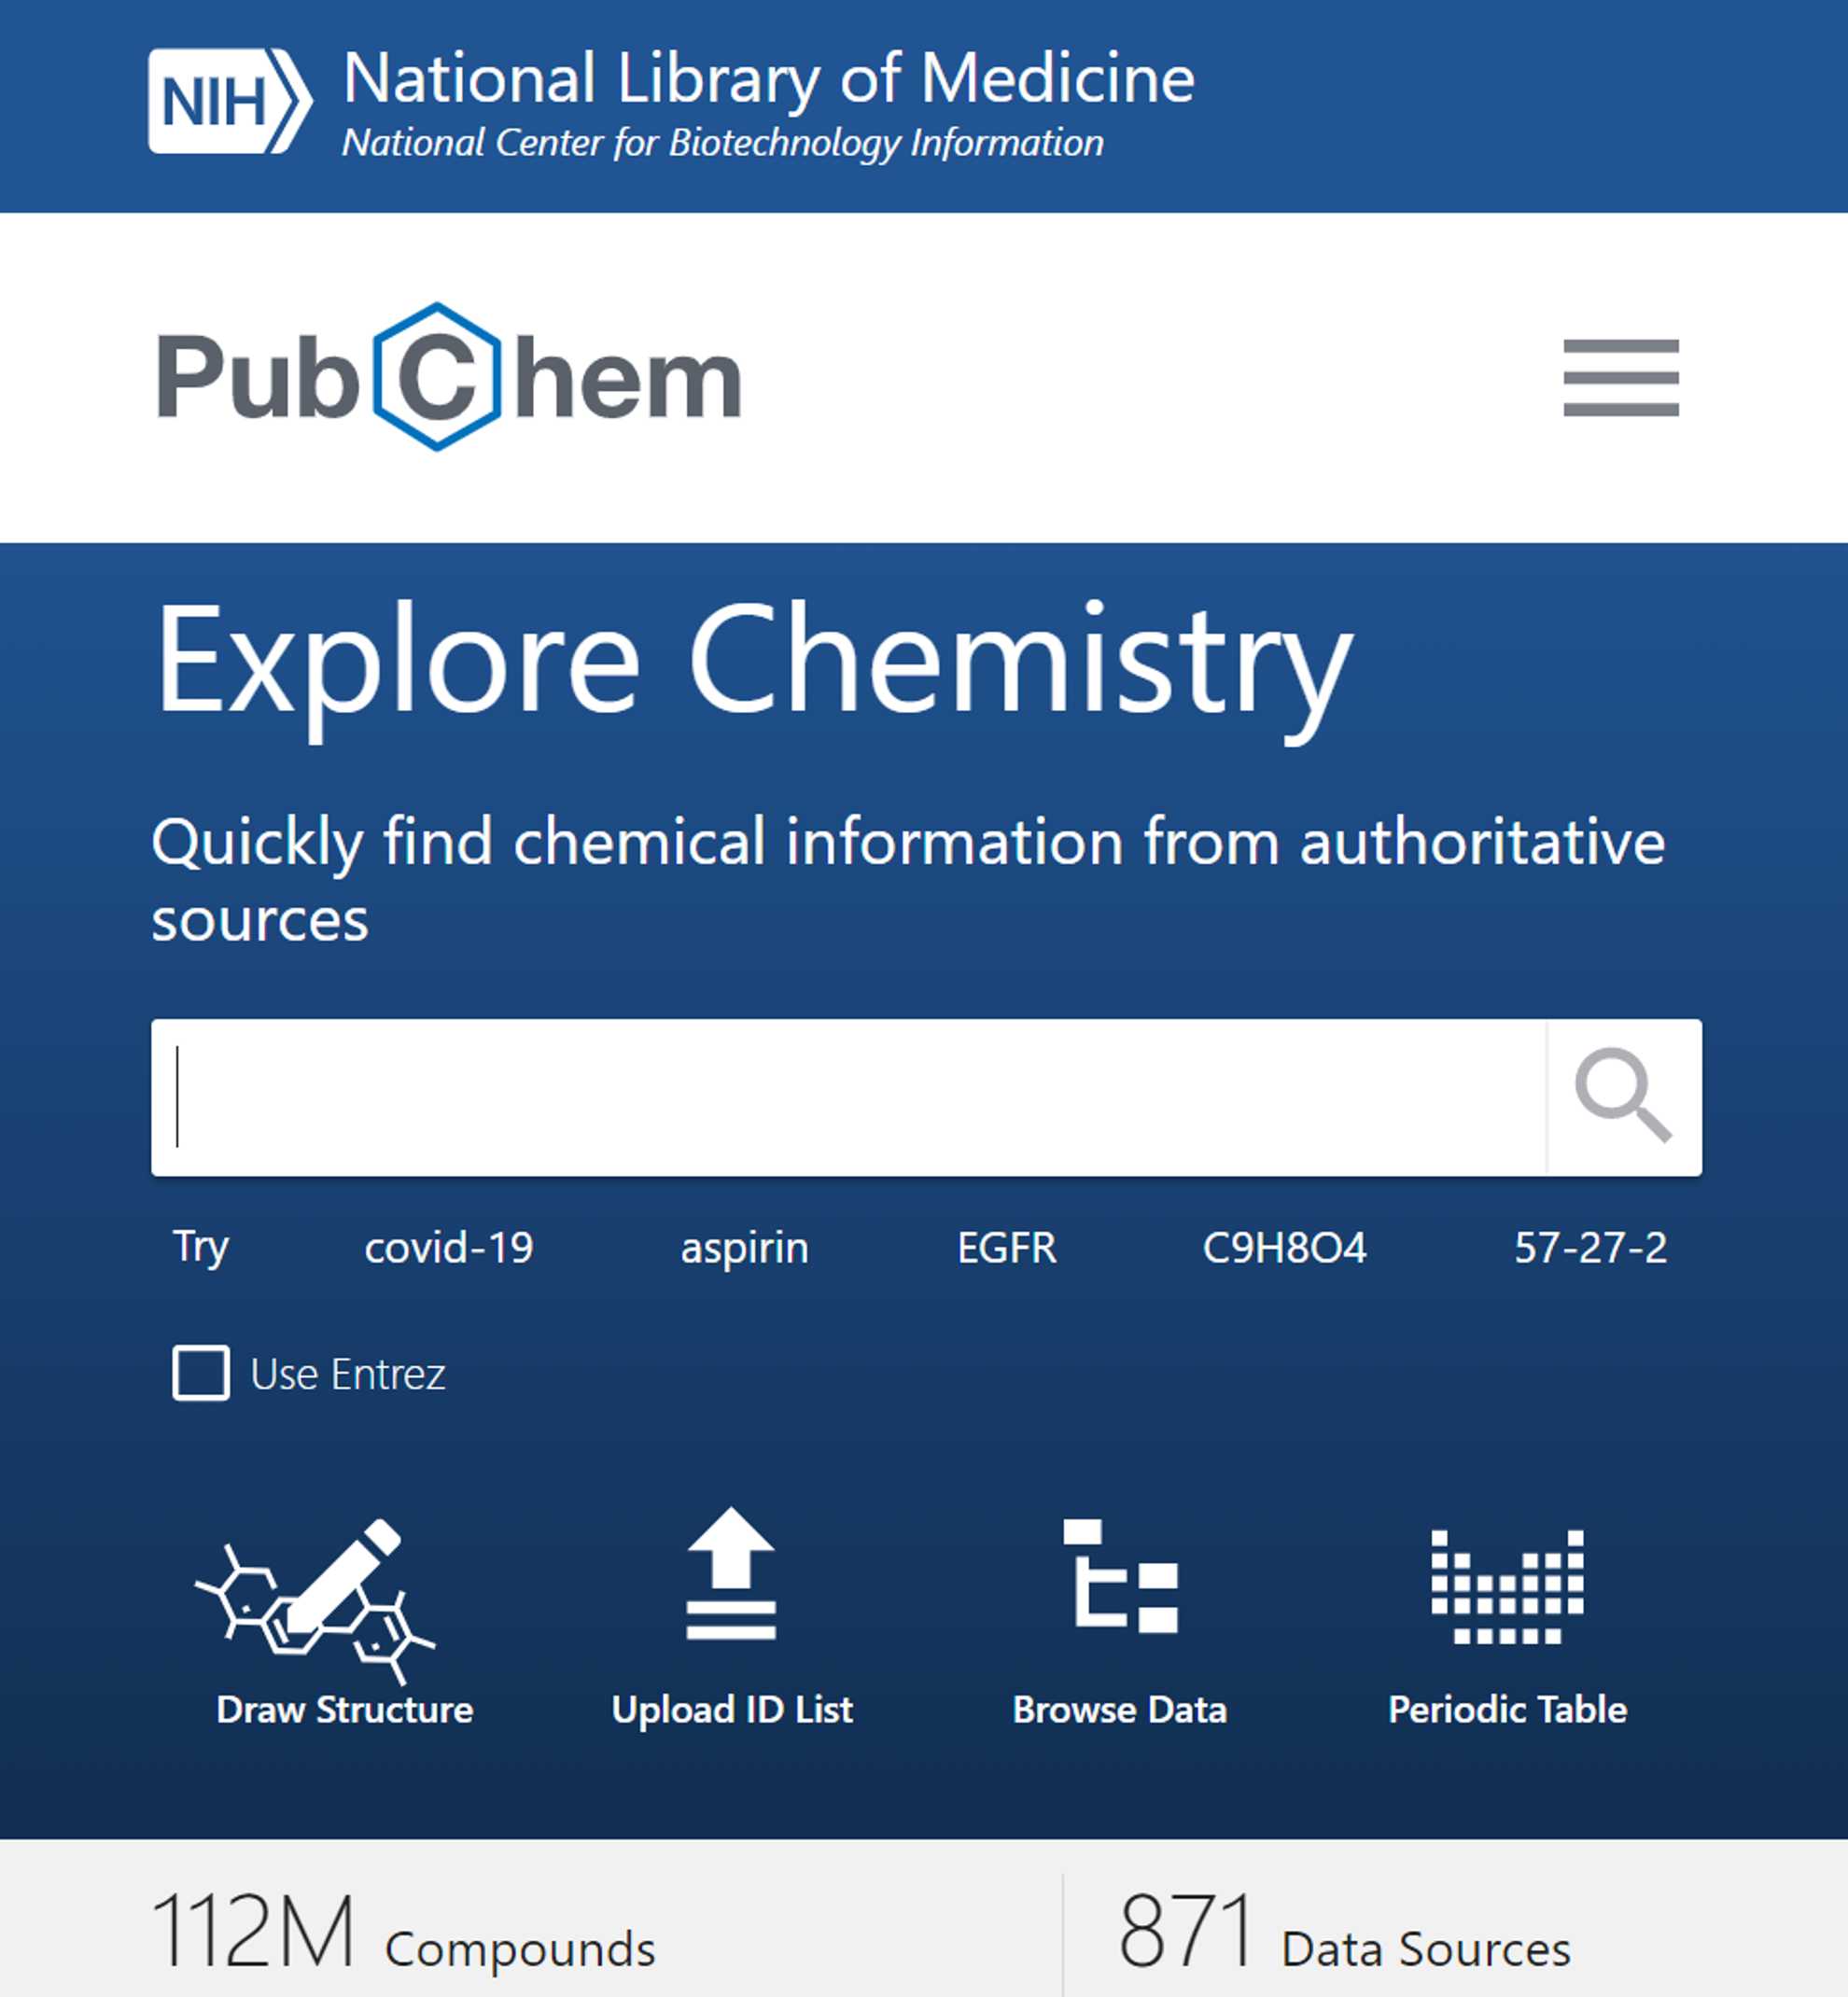 PubChem's Homepage